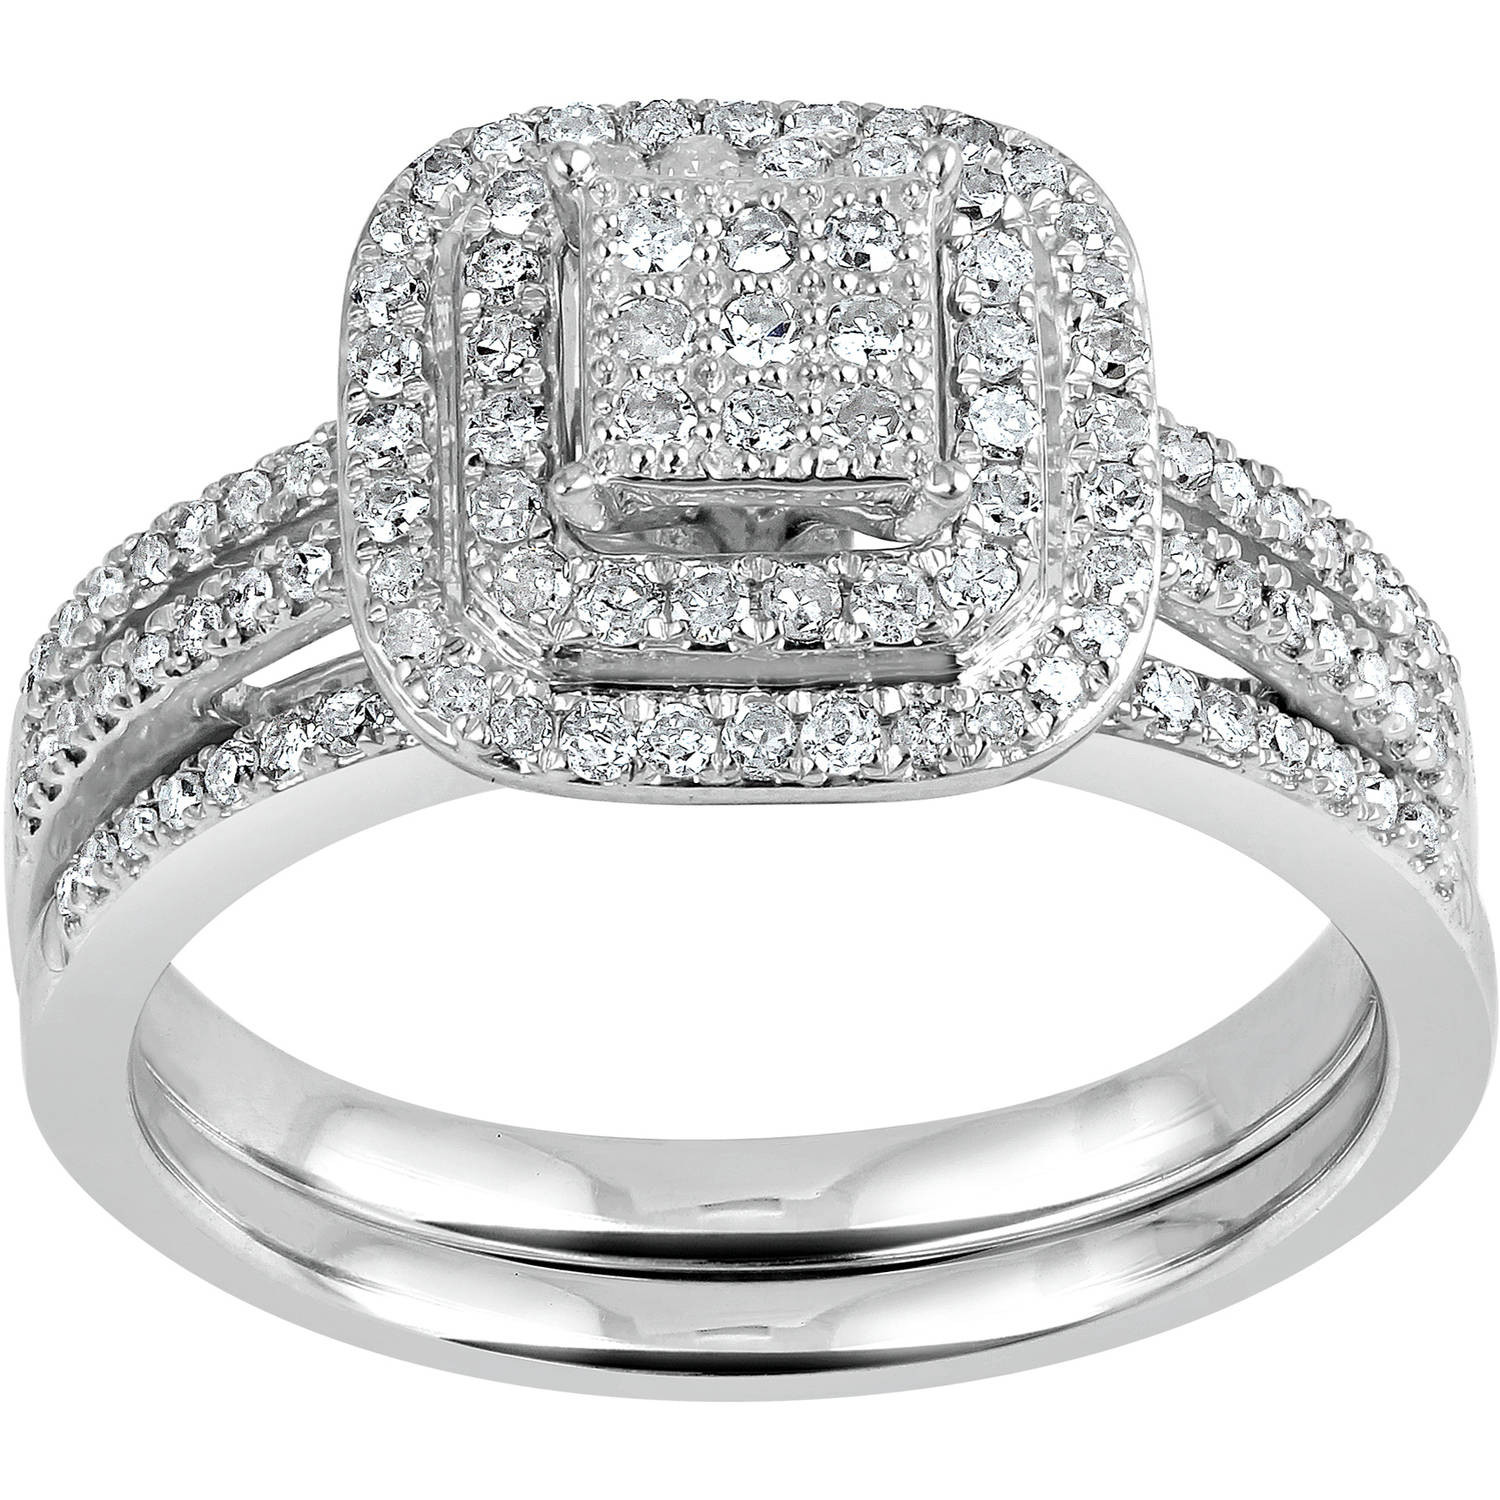 Wedding Ring Sets Walmart
 Forever Bride 1 4 Carat T W Diamond Bridal Set in